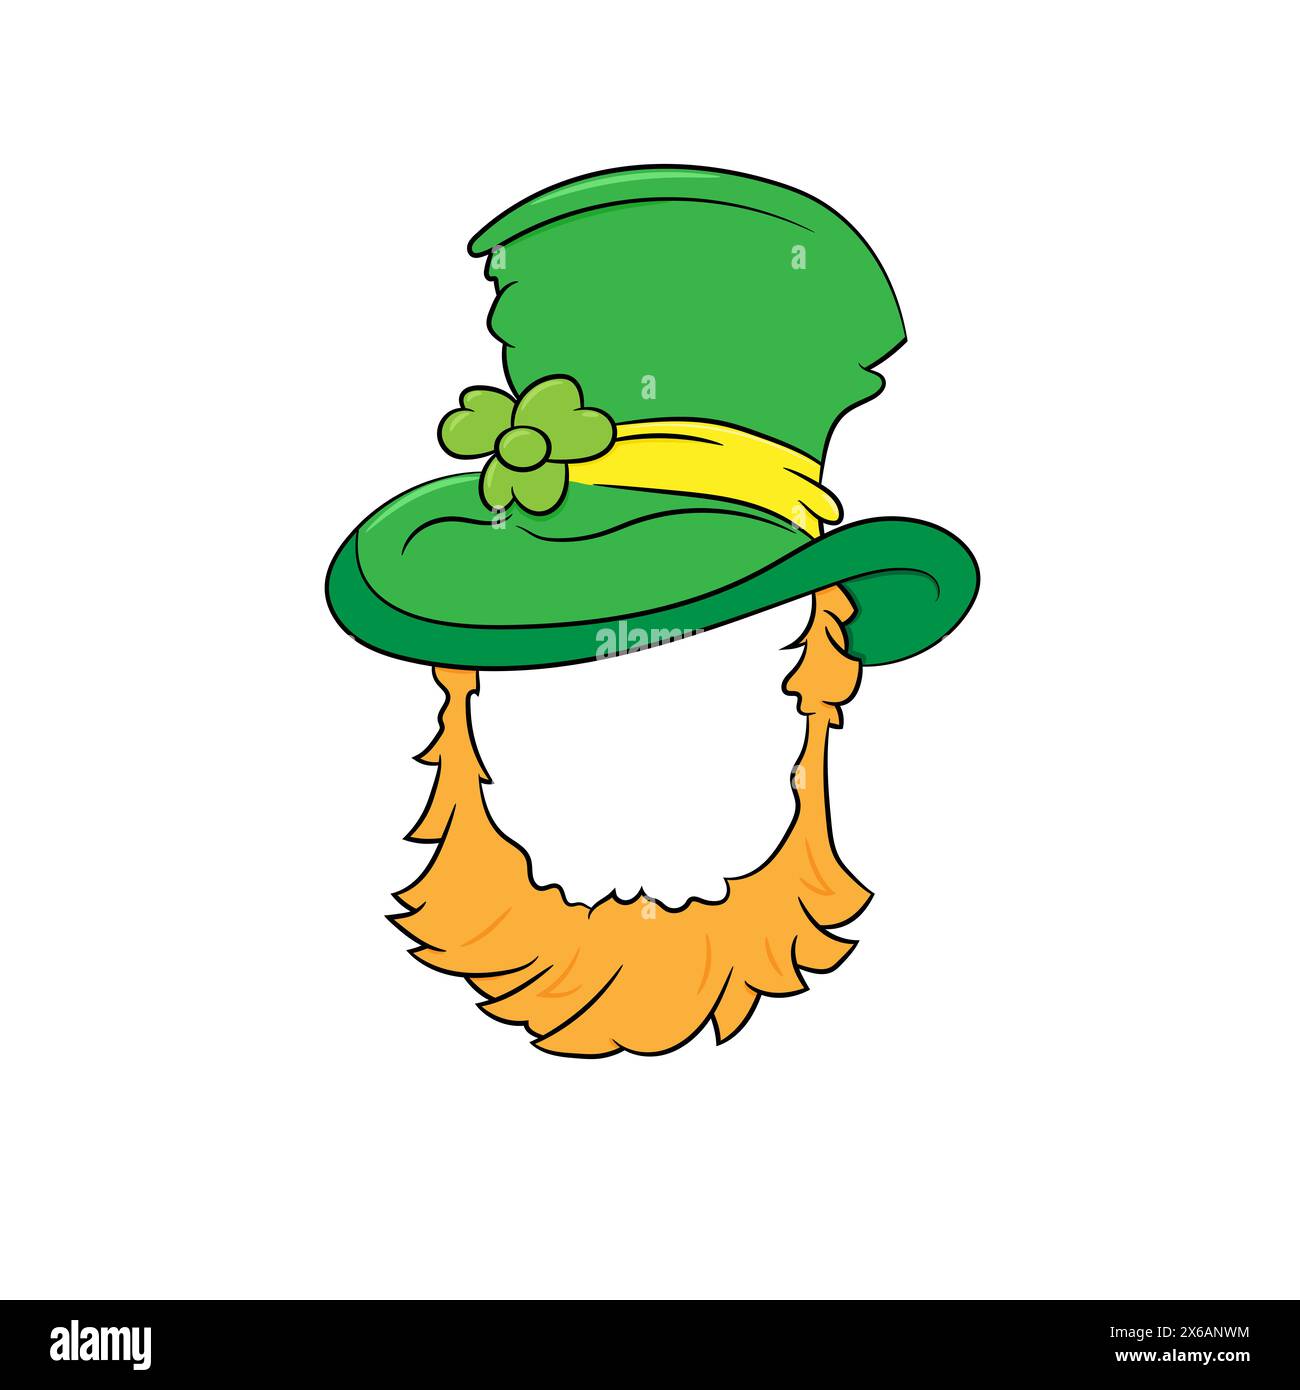 St. Patricks Day icon on a white background, illustration Stock Photo